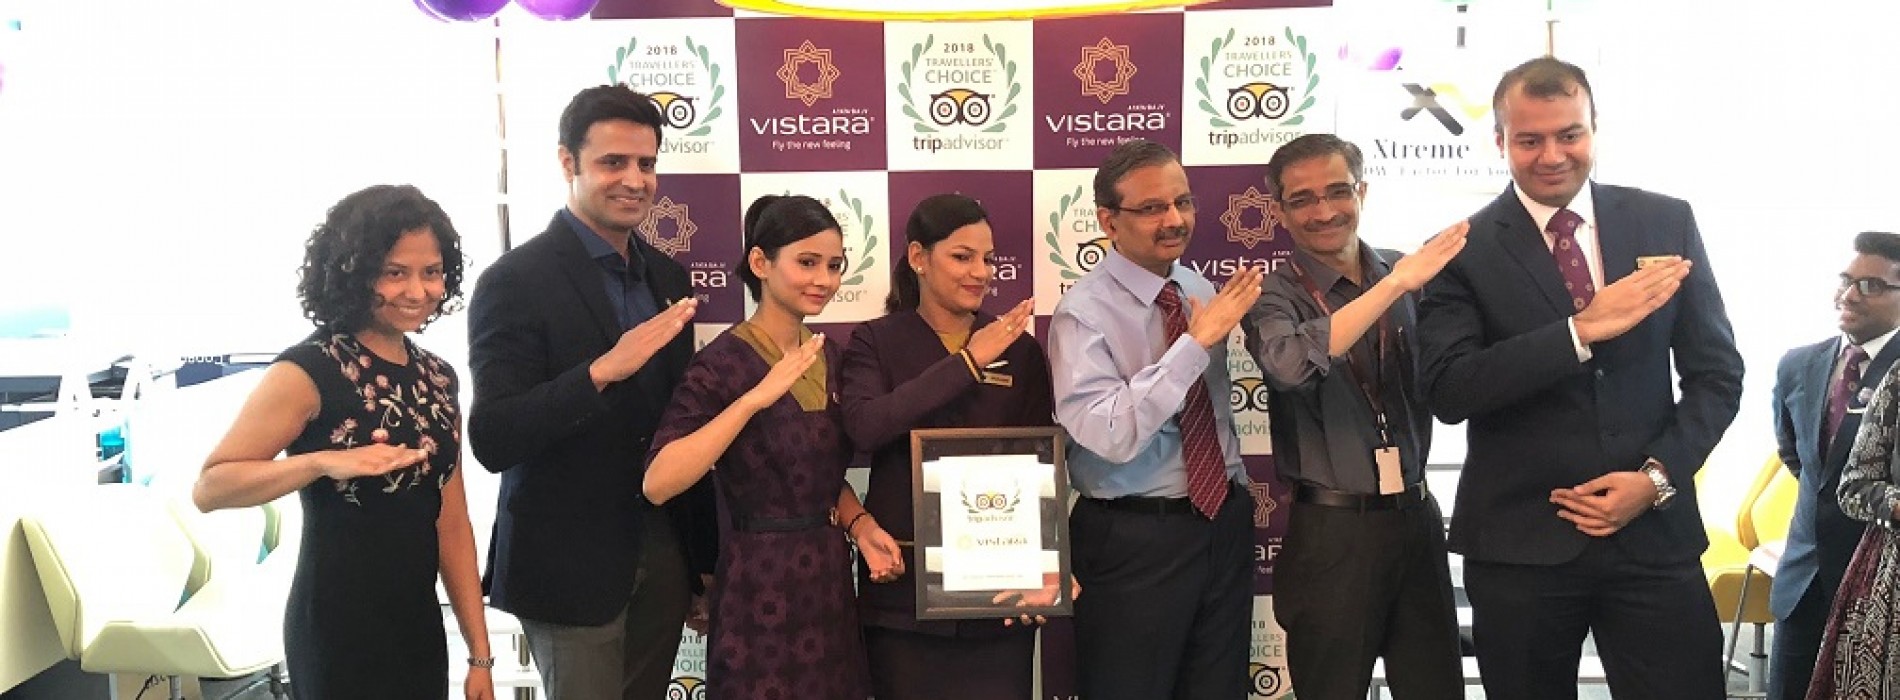 Vistara bags top honours in TripAdvisor’s Travellers’ Choice Awards